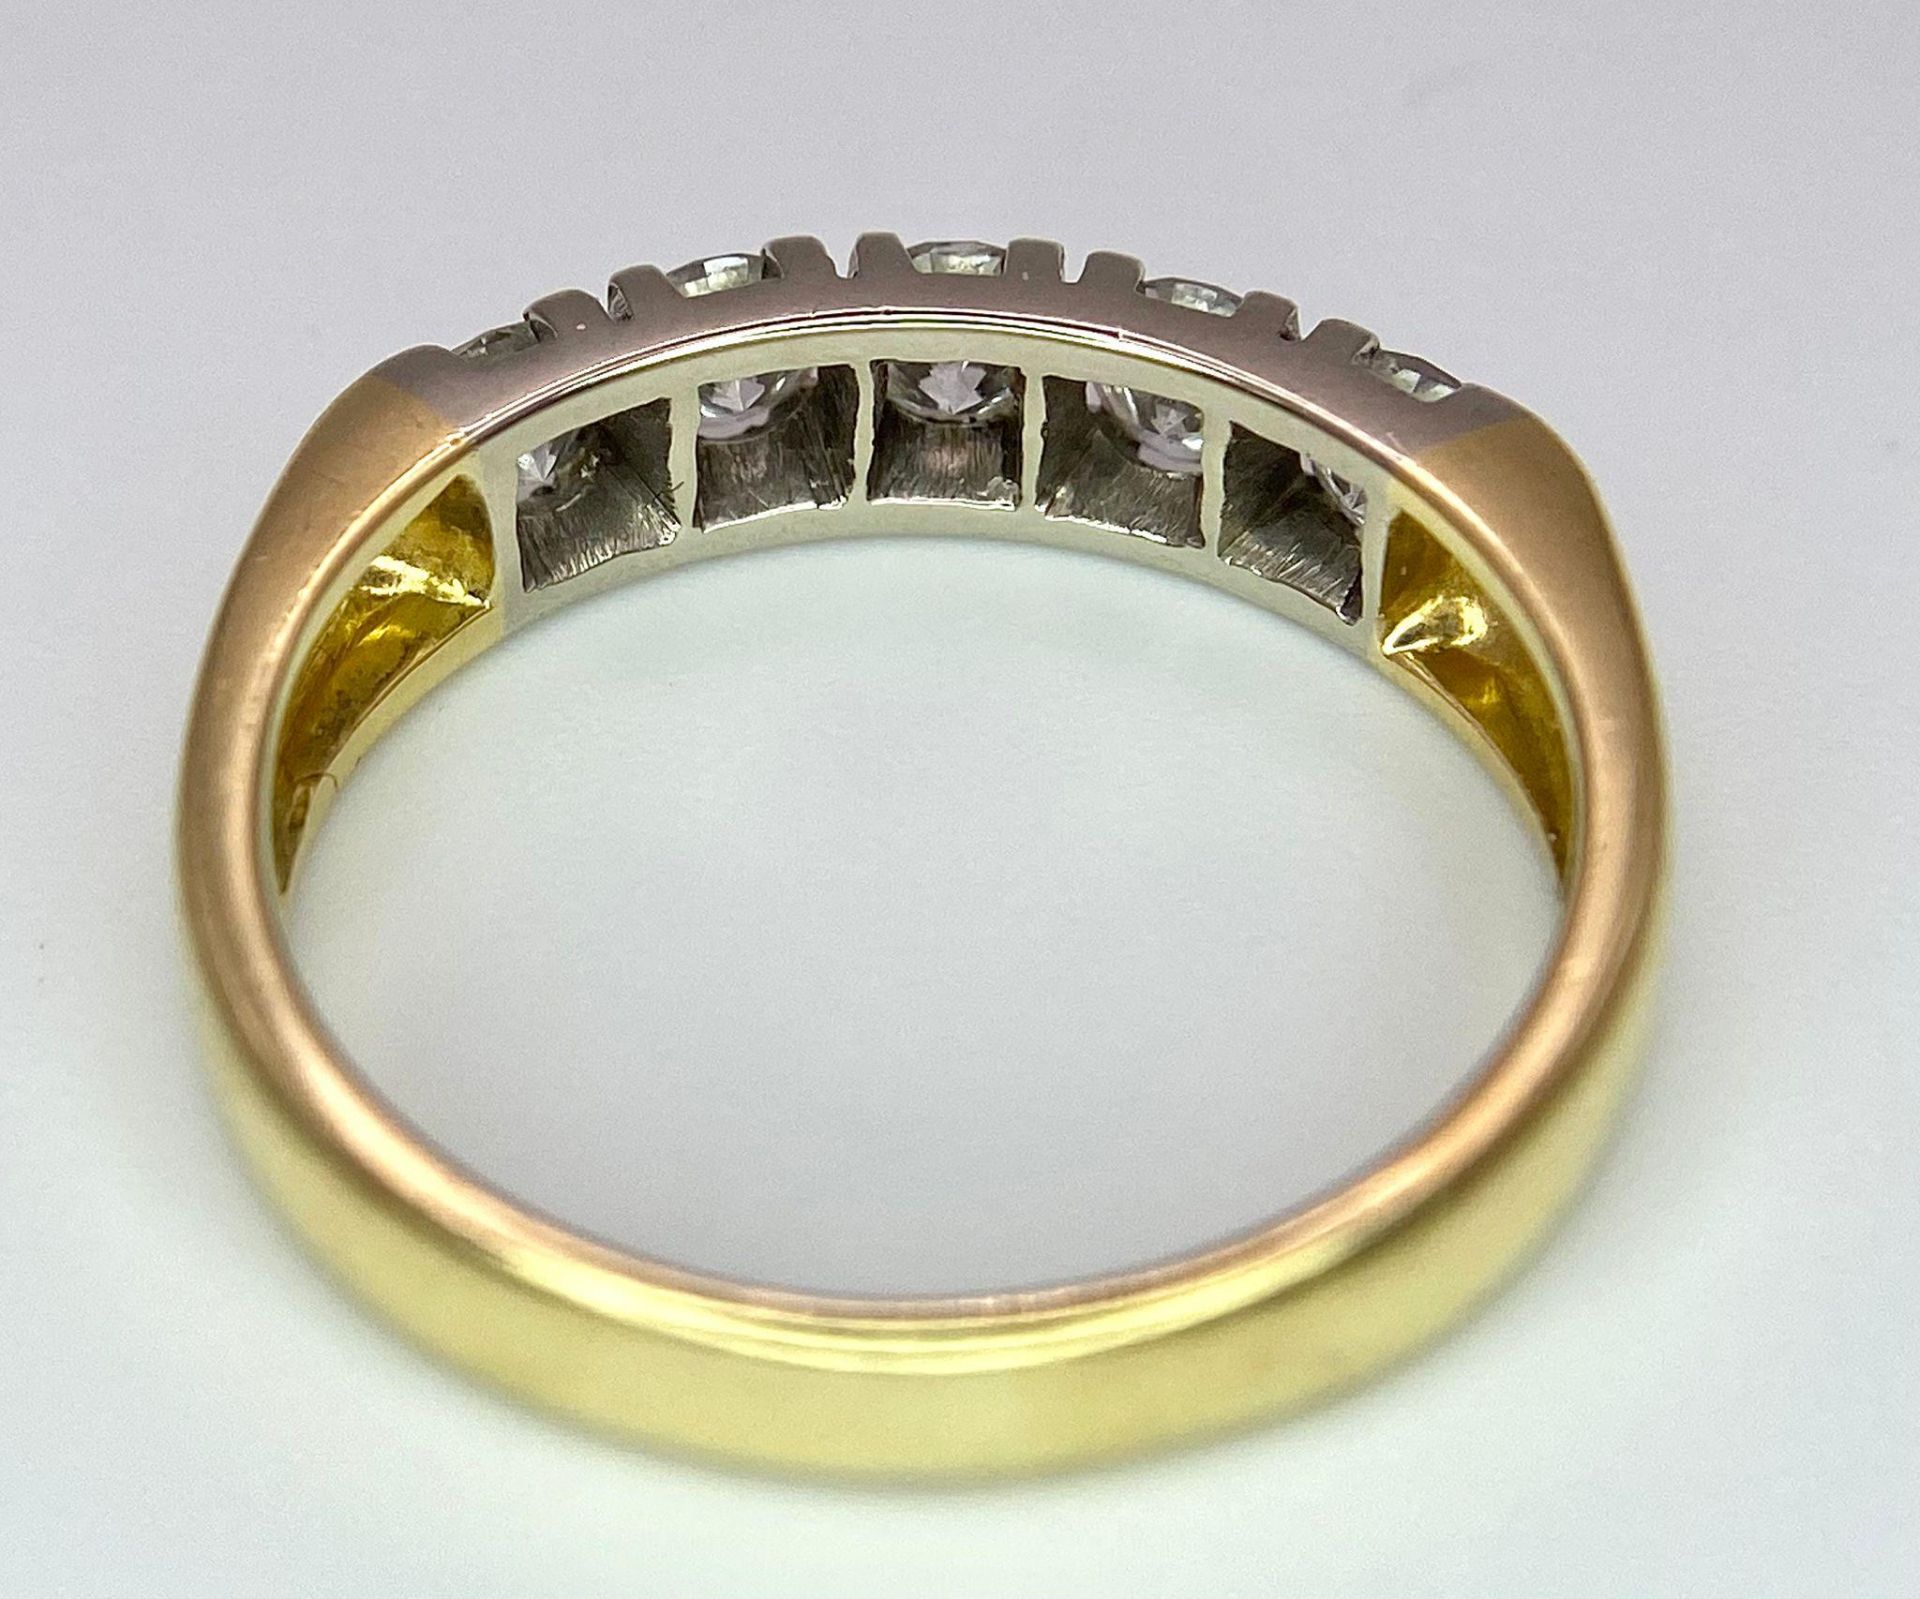 An 18K Yellow Gold Five Stone Diamond Ring. 0.85ctw of brilliant round cut diamonds. Size L. 3.6g - Image 7 of 8